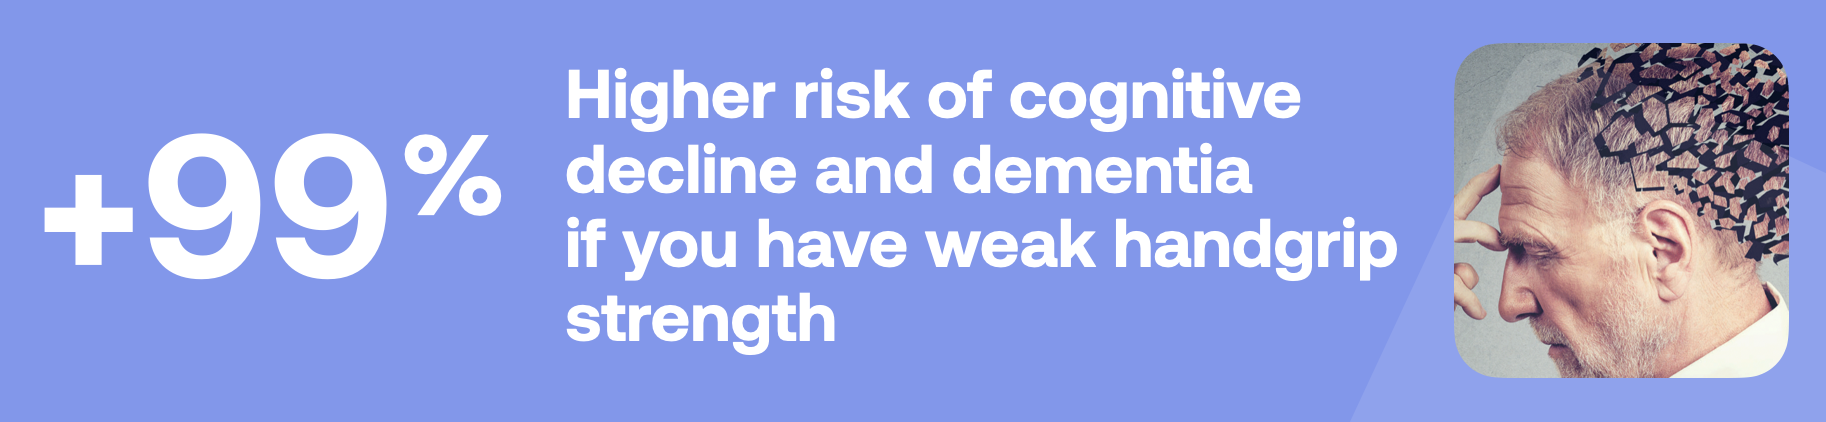 risk of cognitive decline and dementia weak handgrip strength statistics